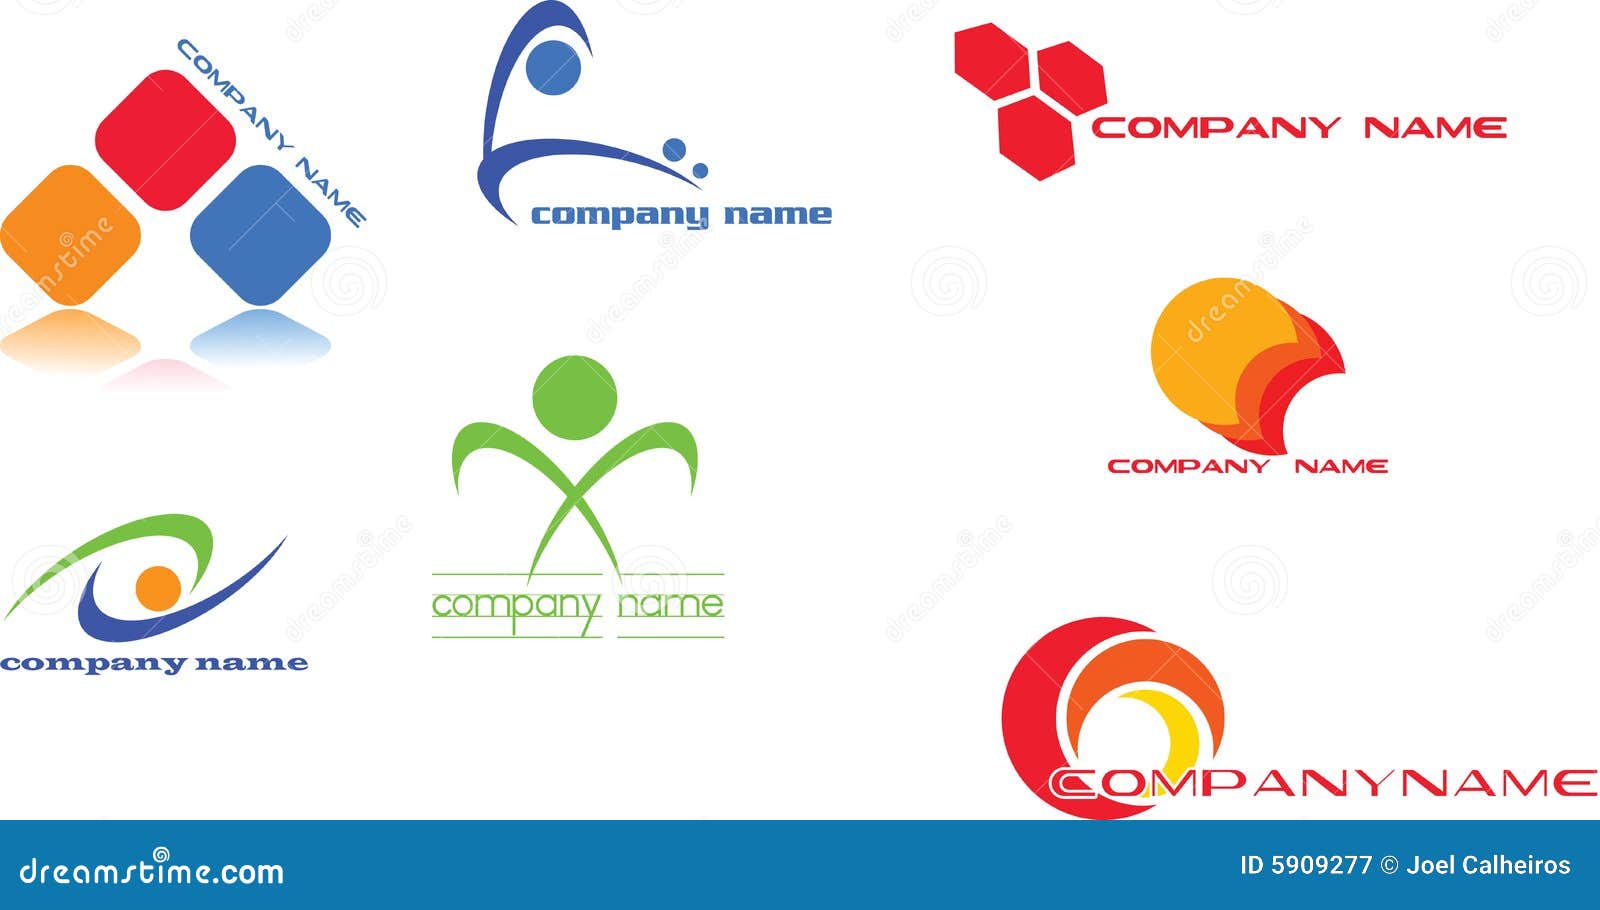 Royalty Free Stock Photography: Logo design